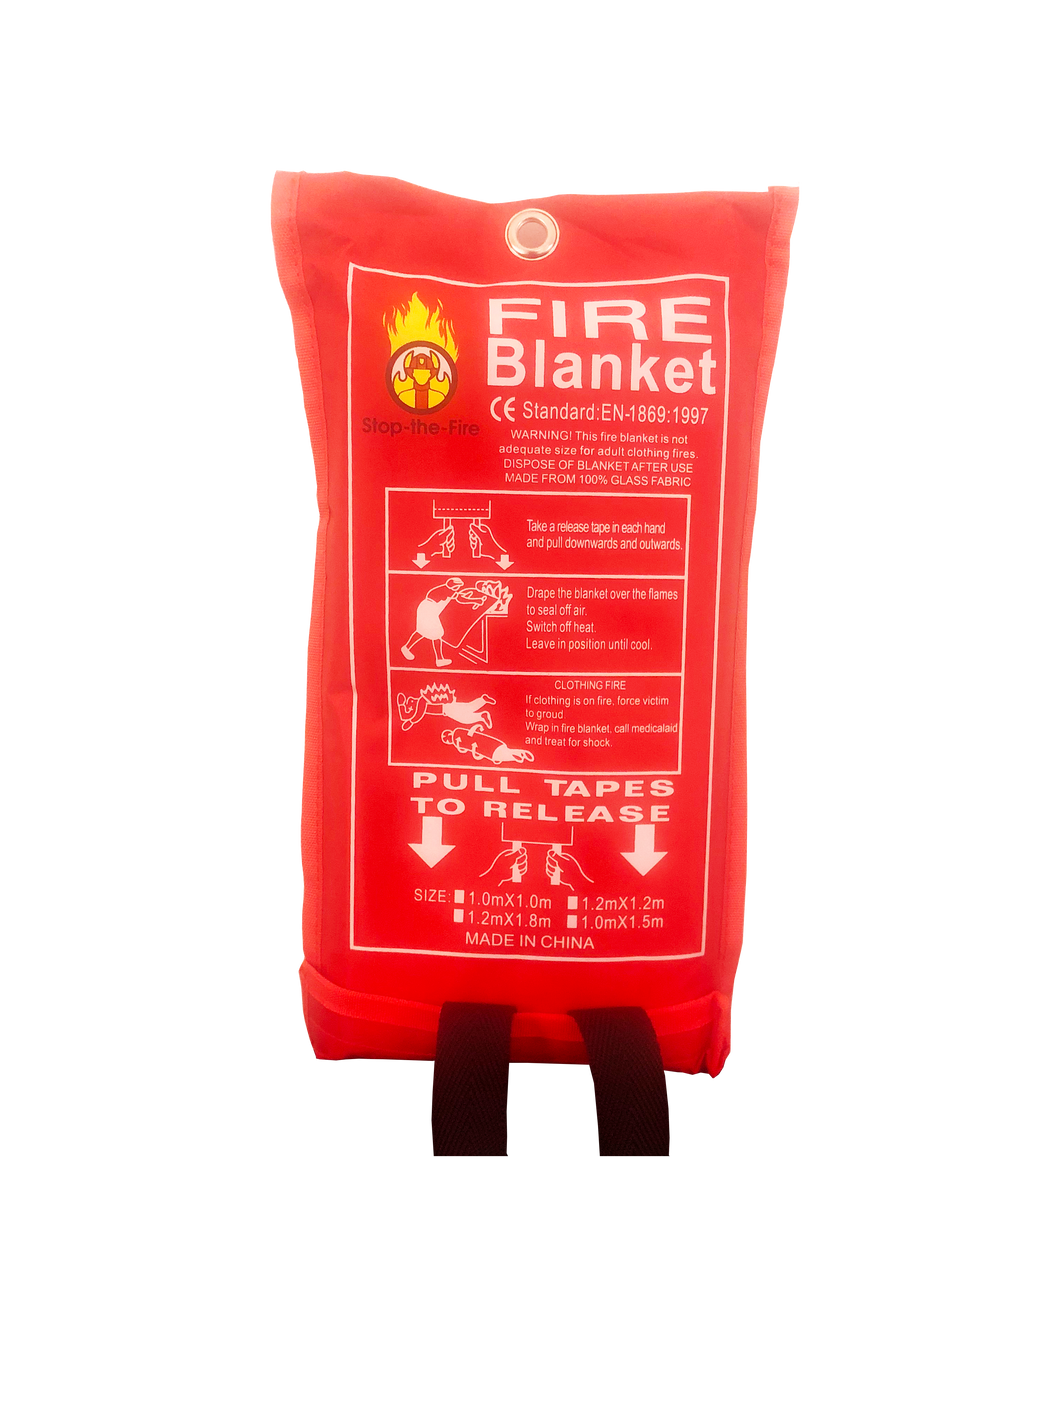 Fire Blanket for Emergency Survival